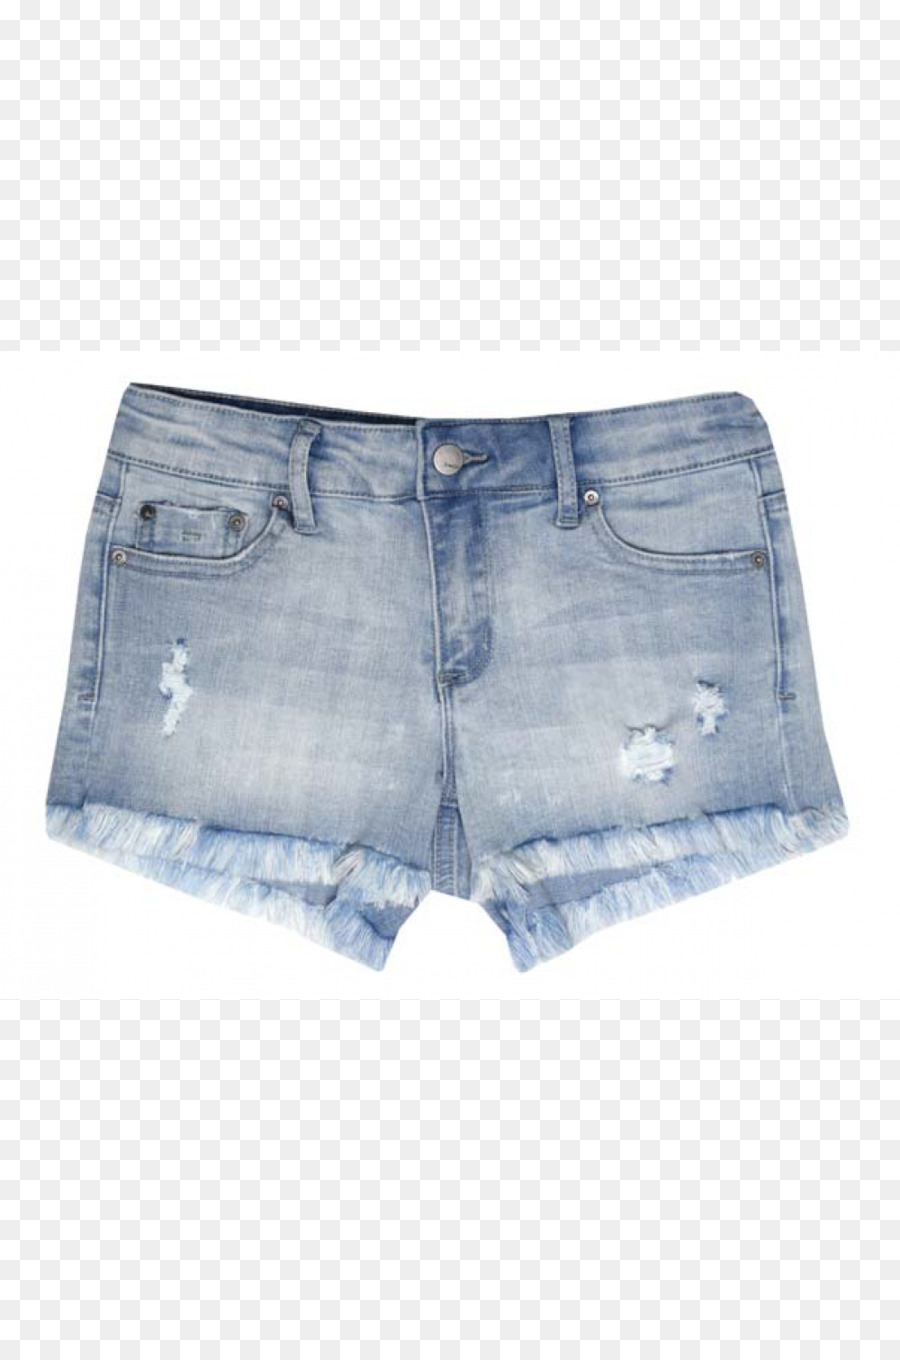 Bermuda shorts Denim Jeans Indigo - jeans png download - 1000*1500 - Free Transparent Bermuda Shorts png Download.